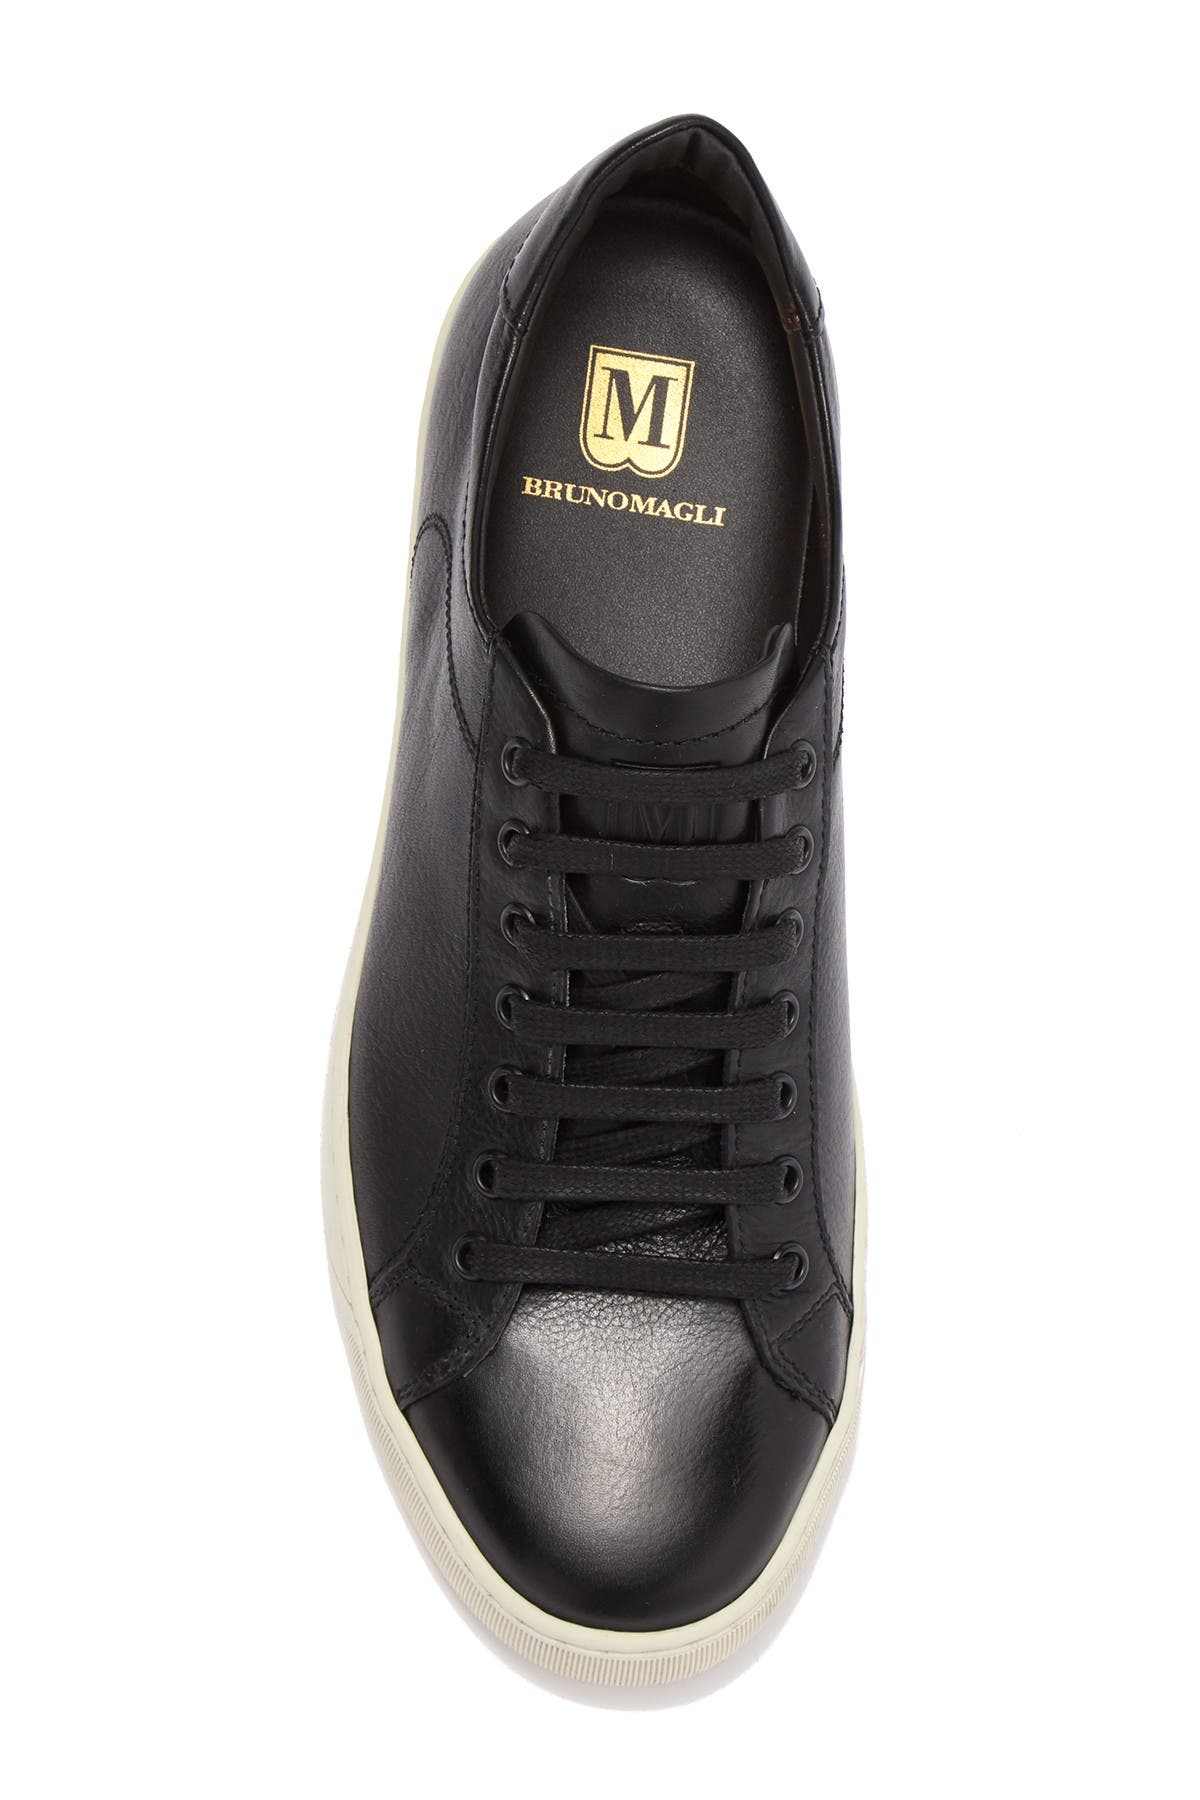 Bruno Magli | Westy II Leather Sneaker 